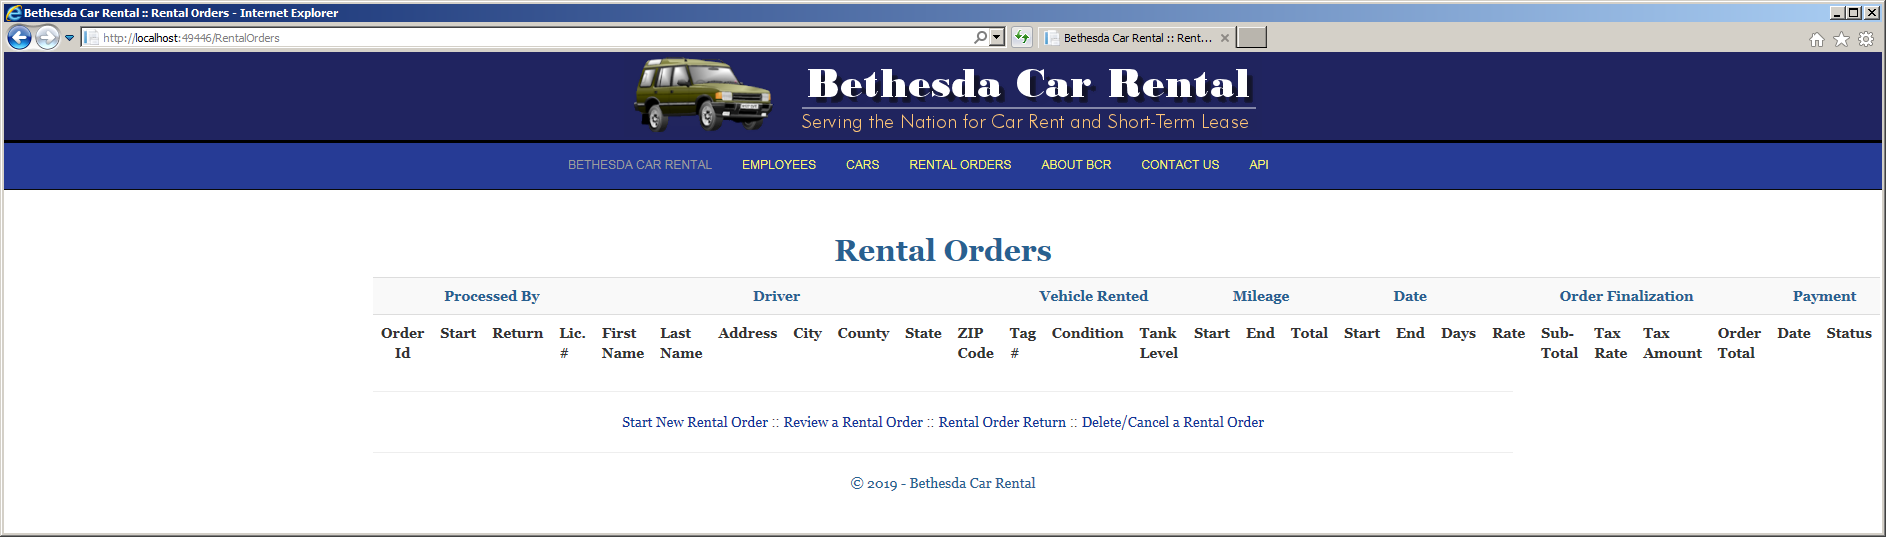 Bethesda Car Rental - Rental Order Start-Up